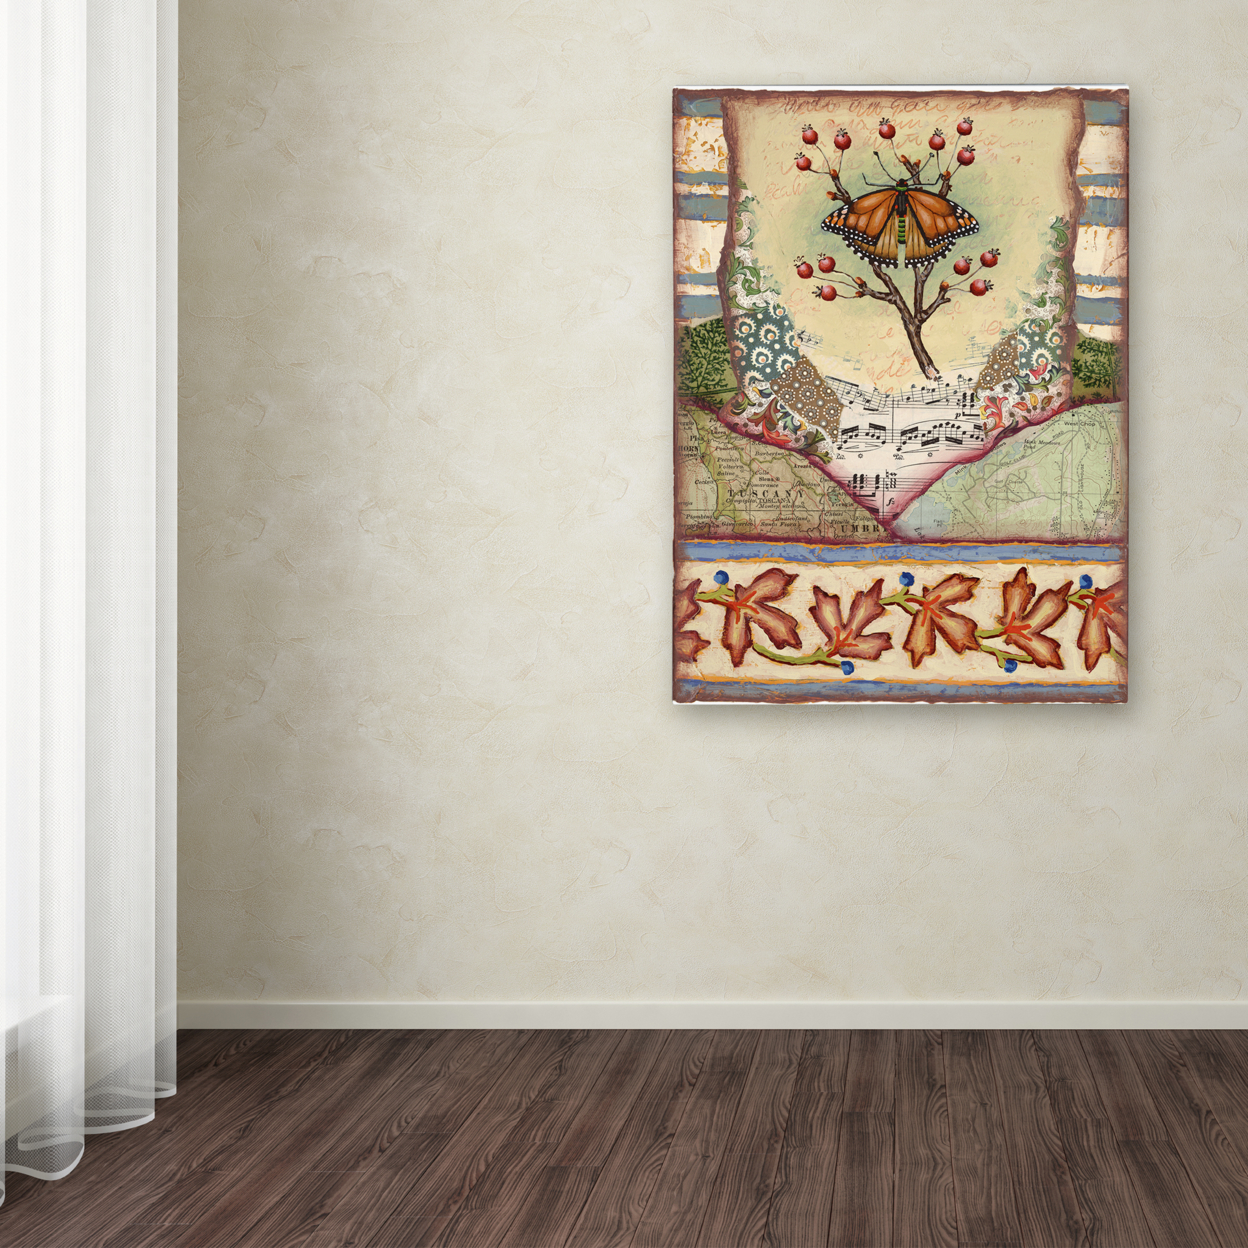 Rachel Paxton 'Mink Meadows Butterfly' Canvas Wall Art 35 X 47 Inches